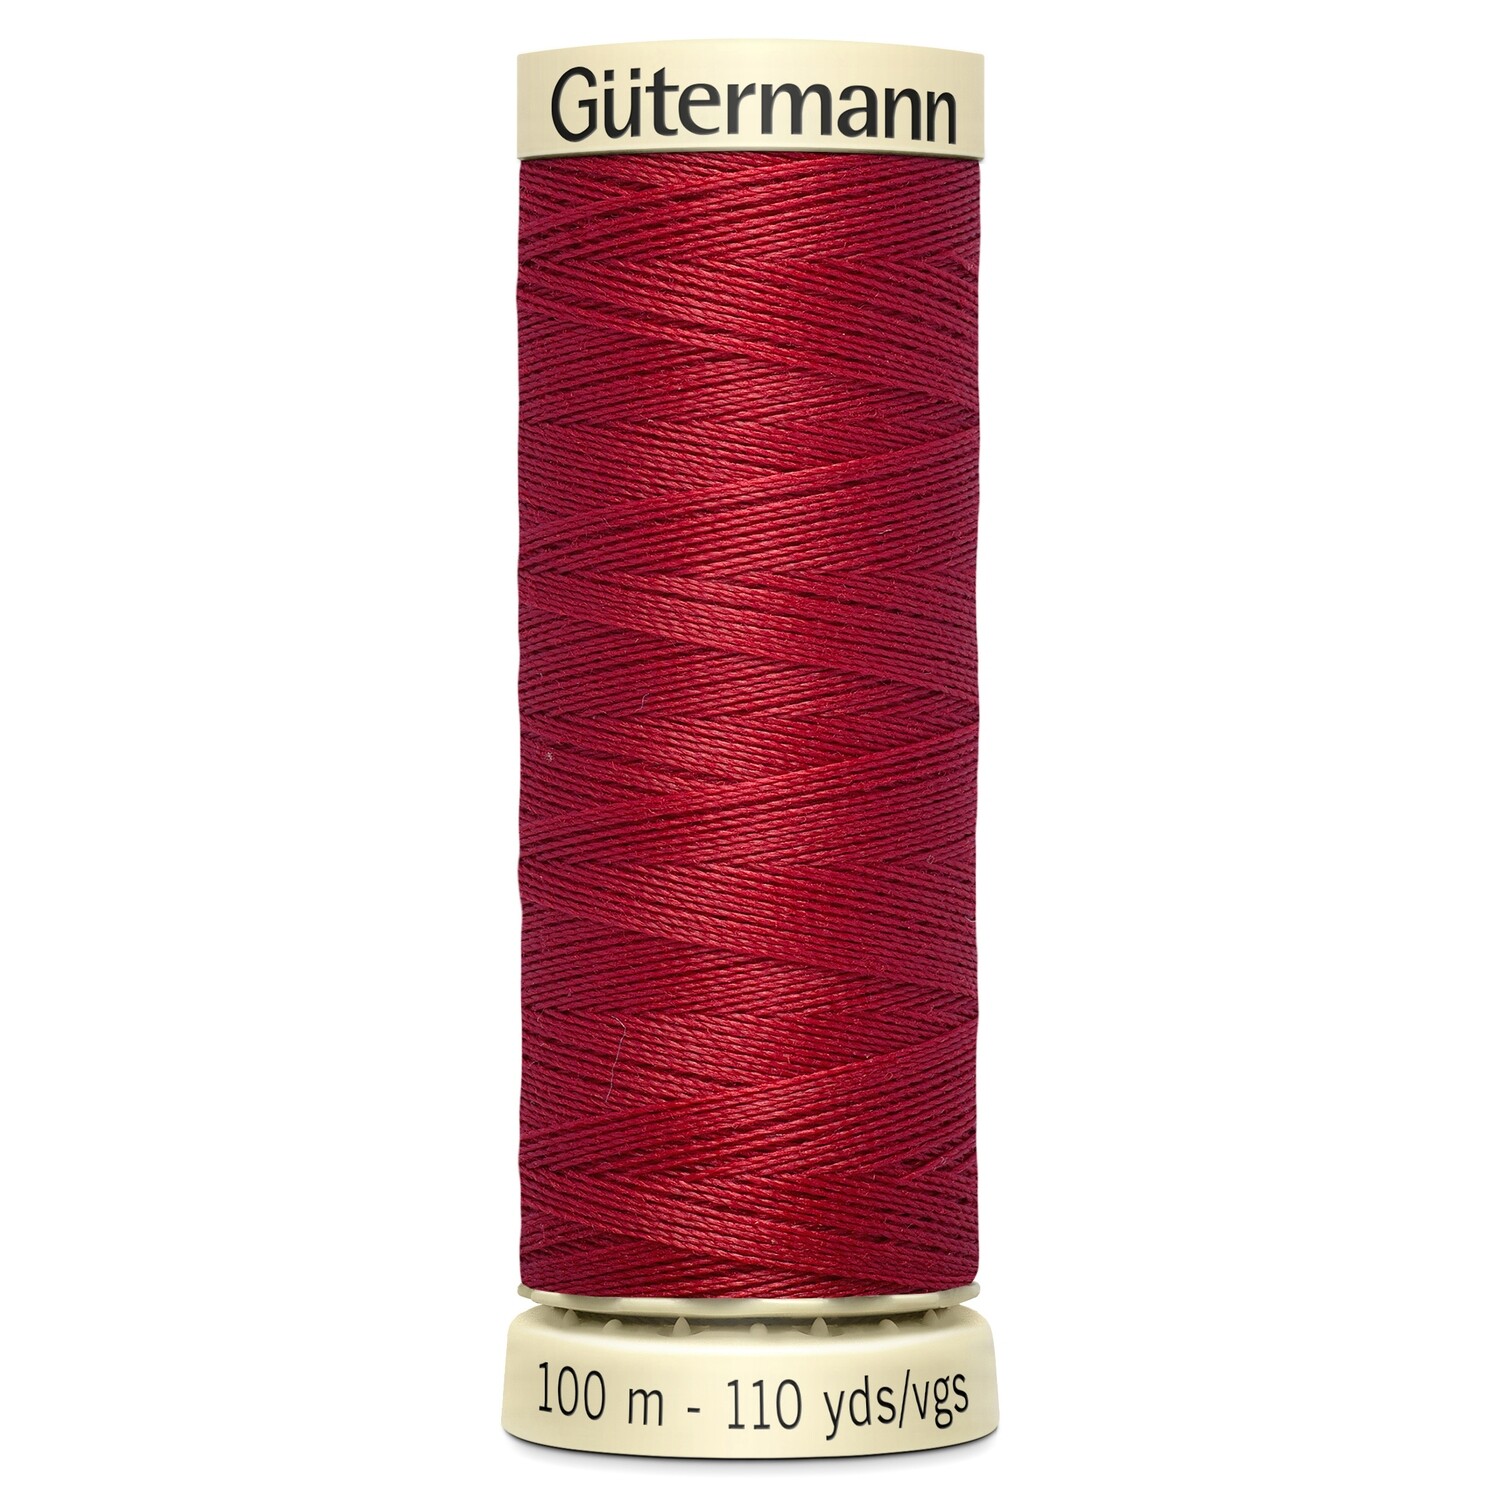 Gutermann Sew-All thread 46